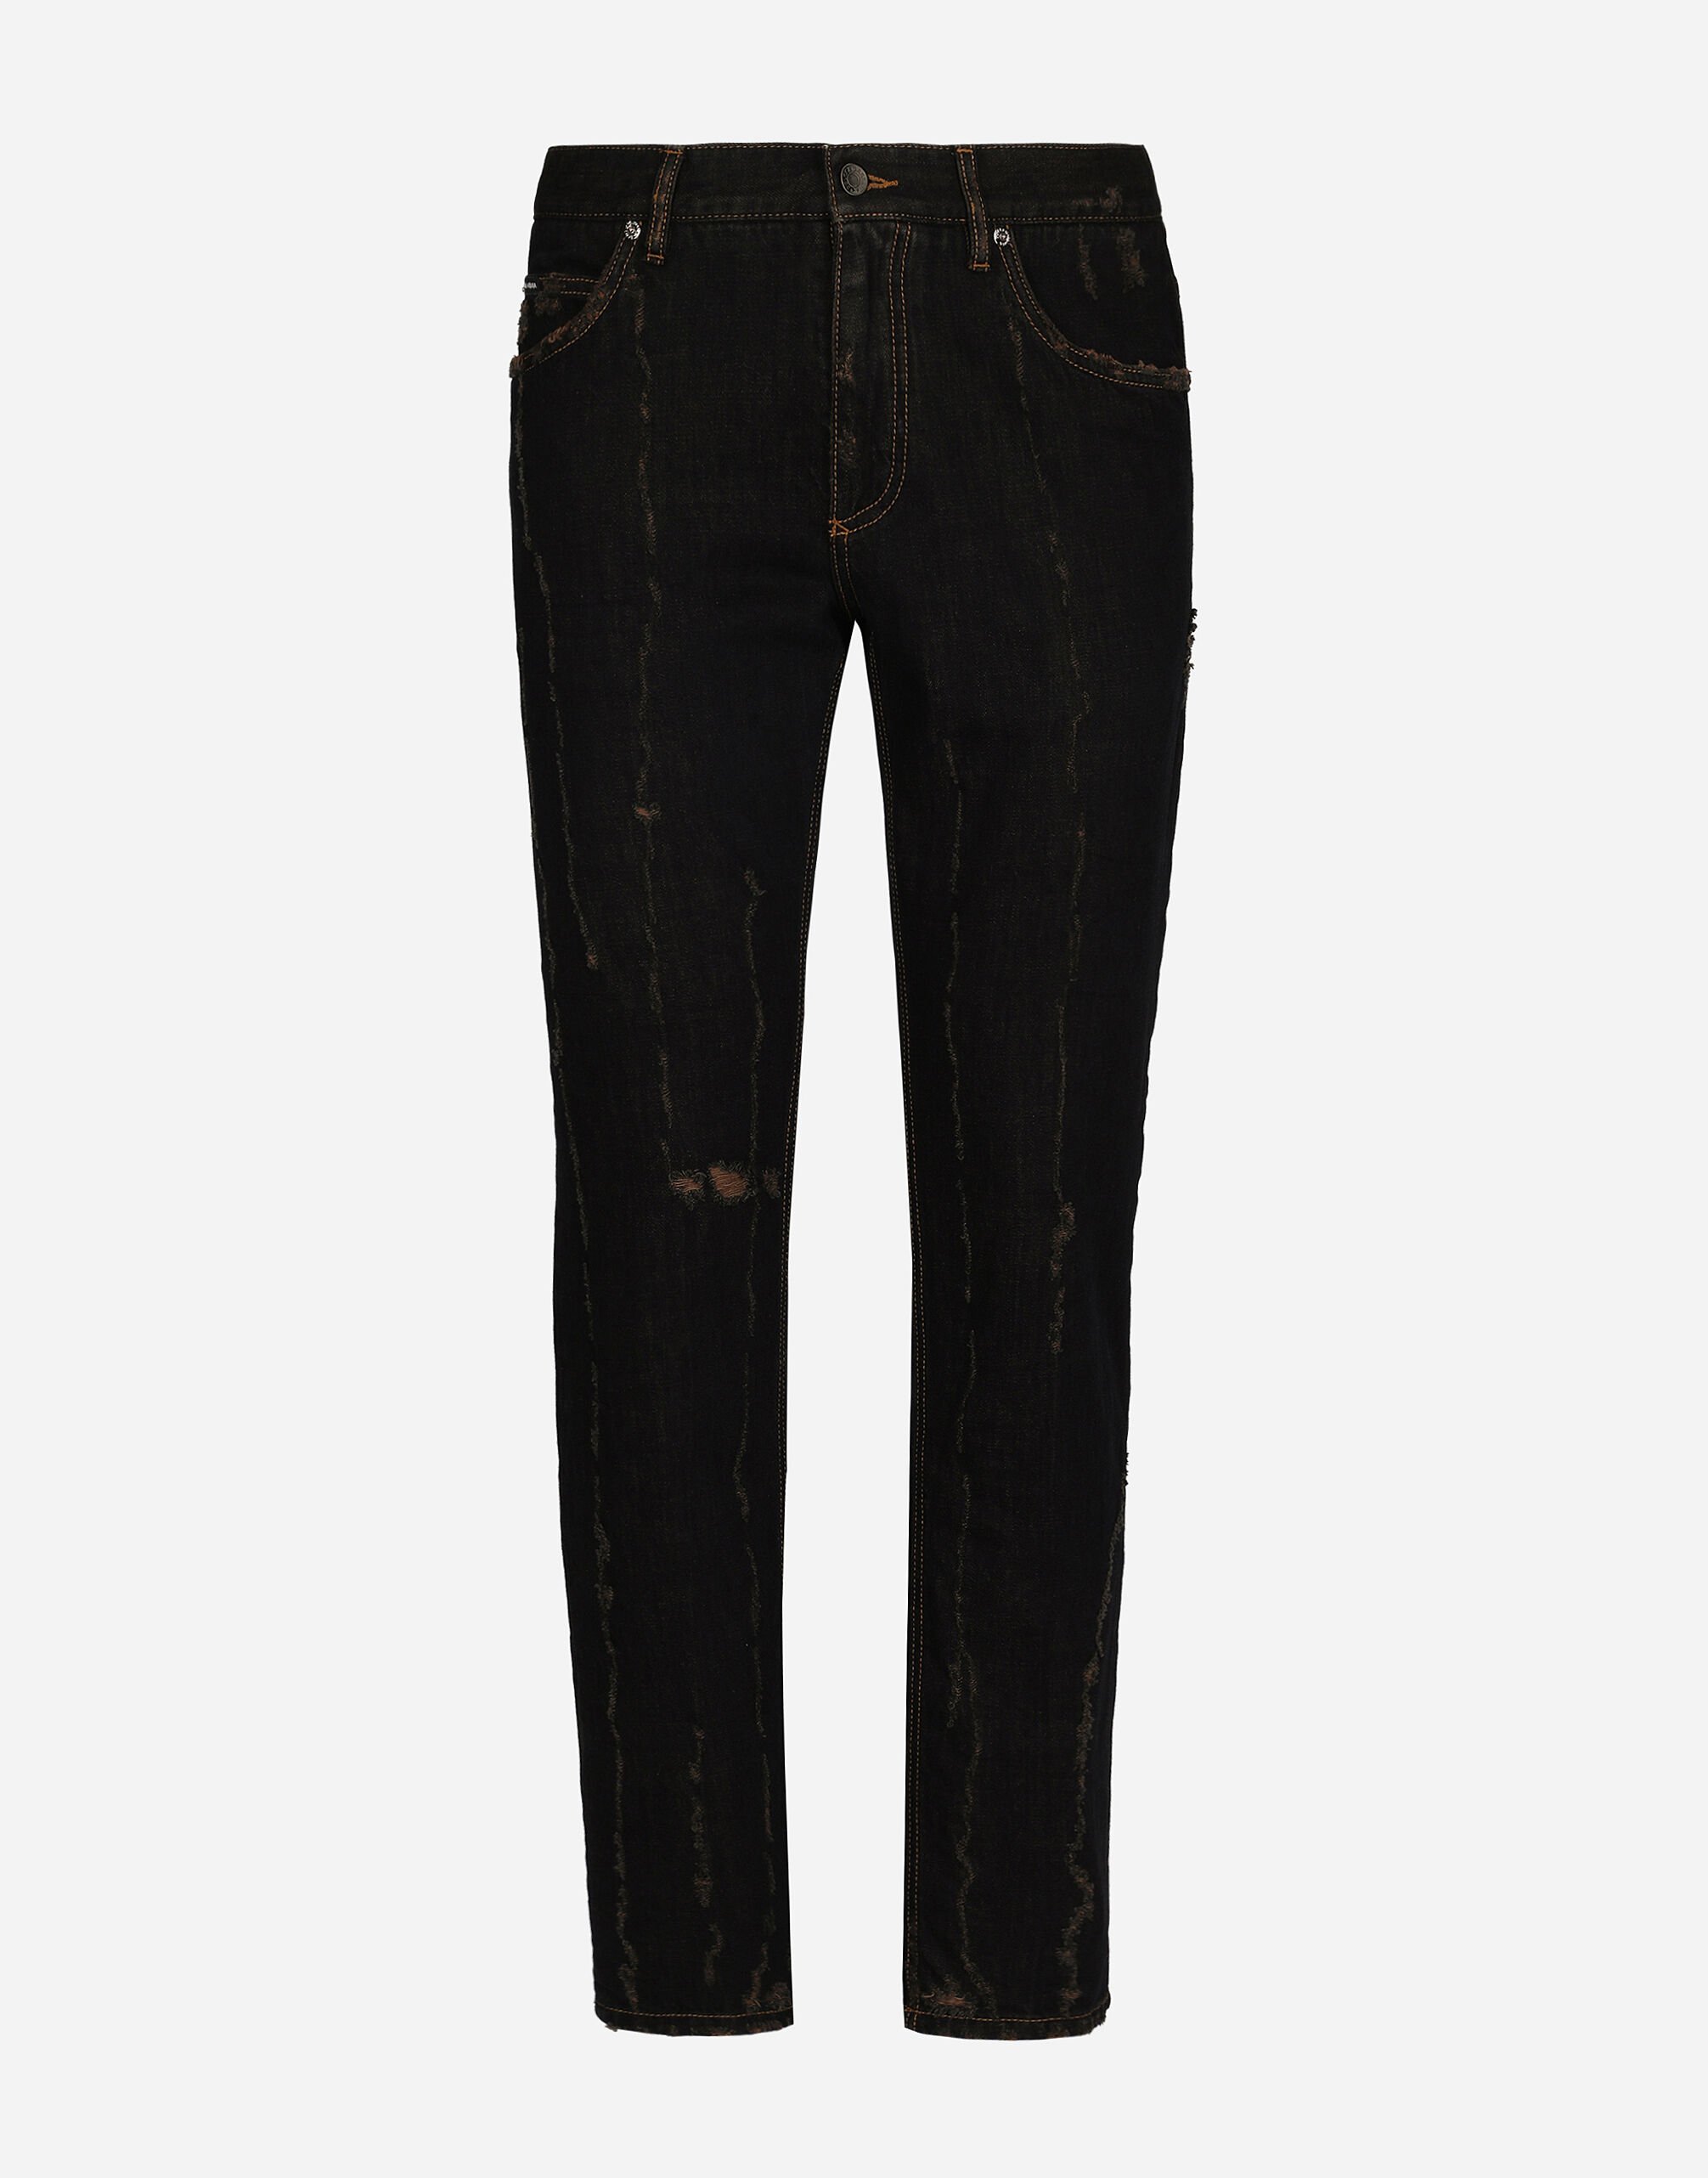 Dolce & Gabbana Jeans regular sovratinto piccole abrasioni Multicolore G9NL5DG8GW9